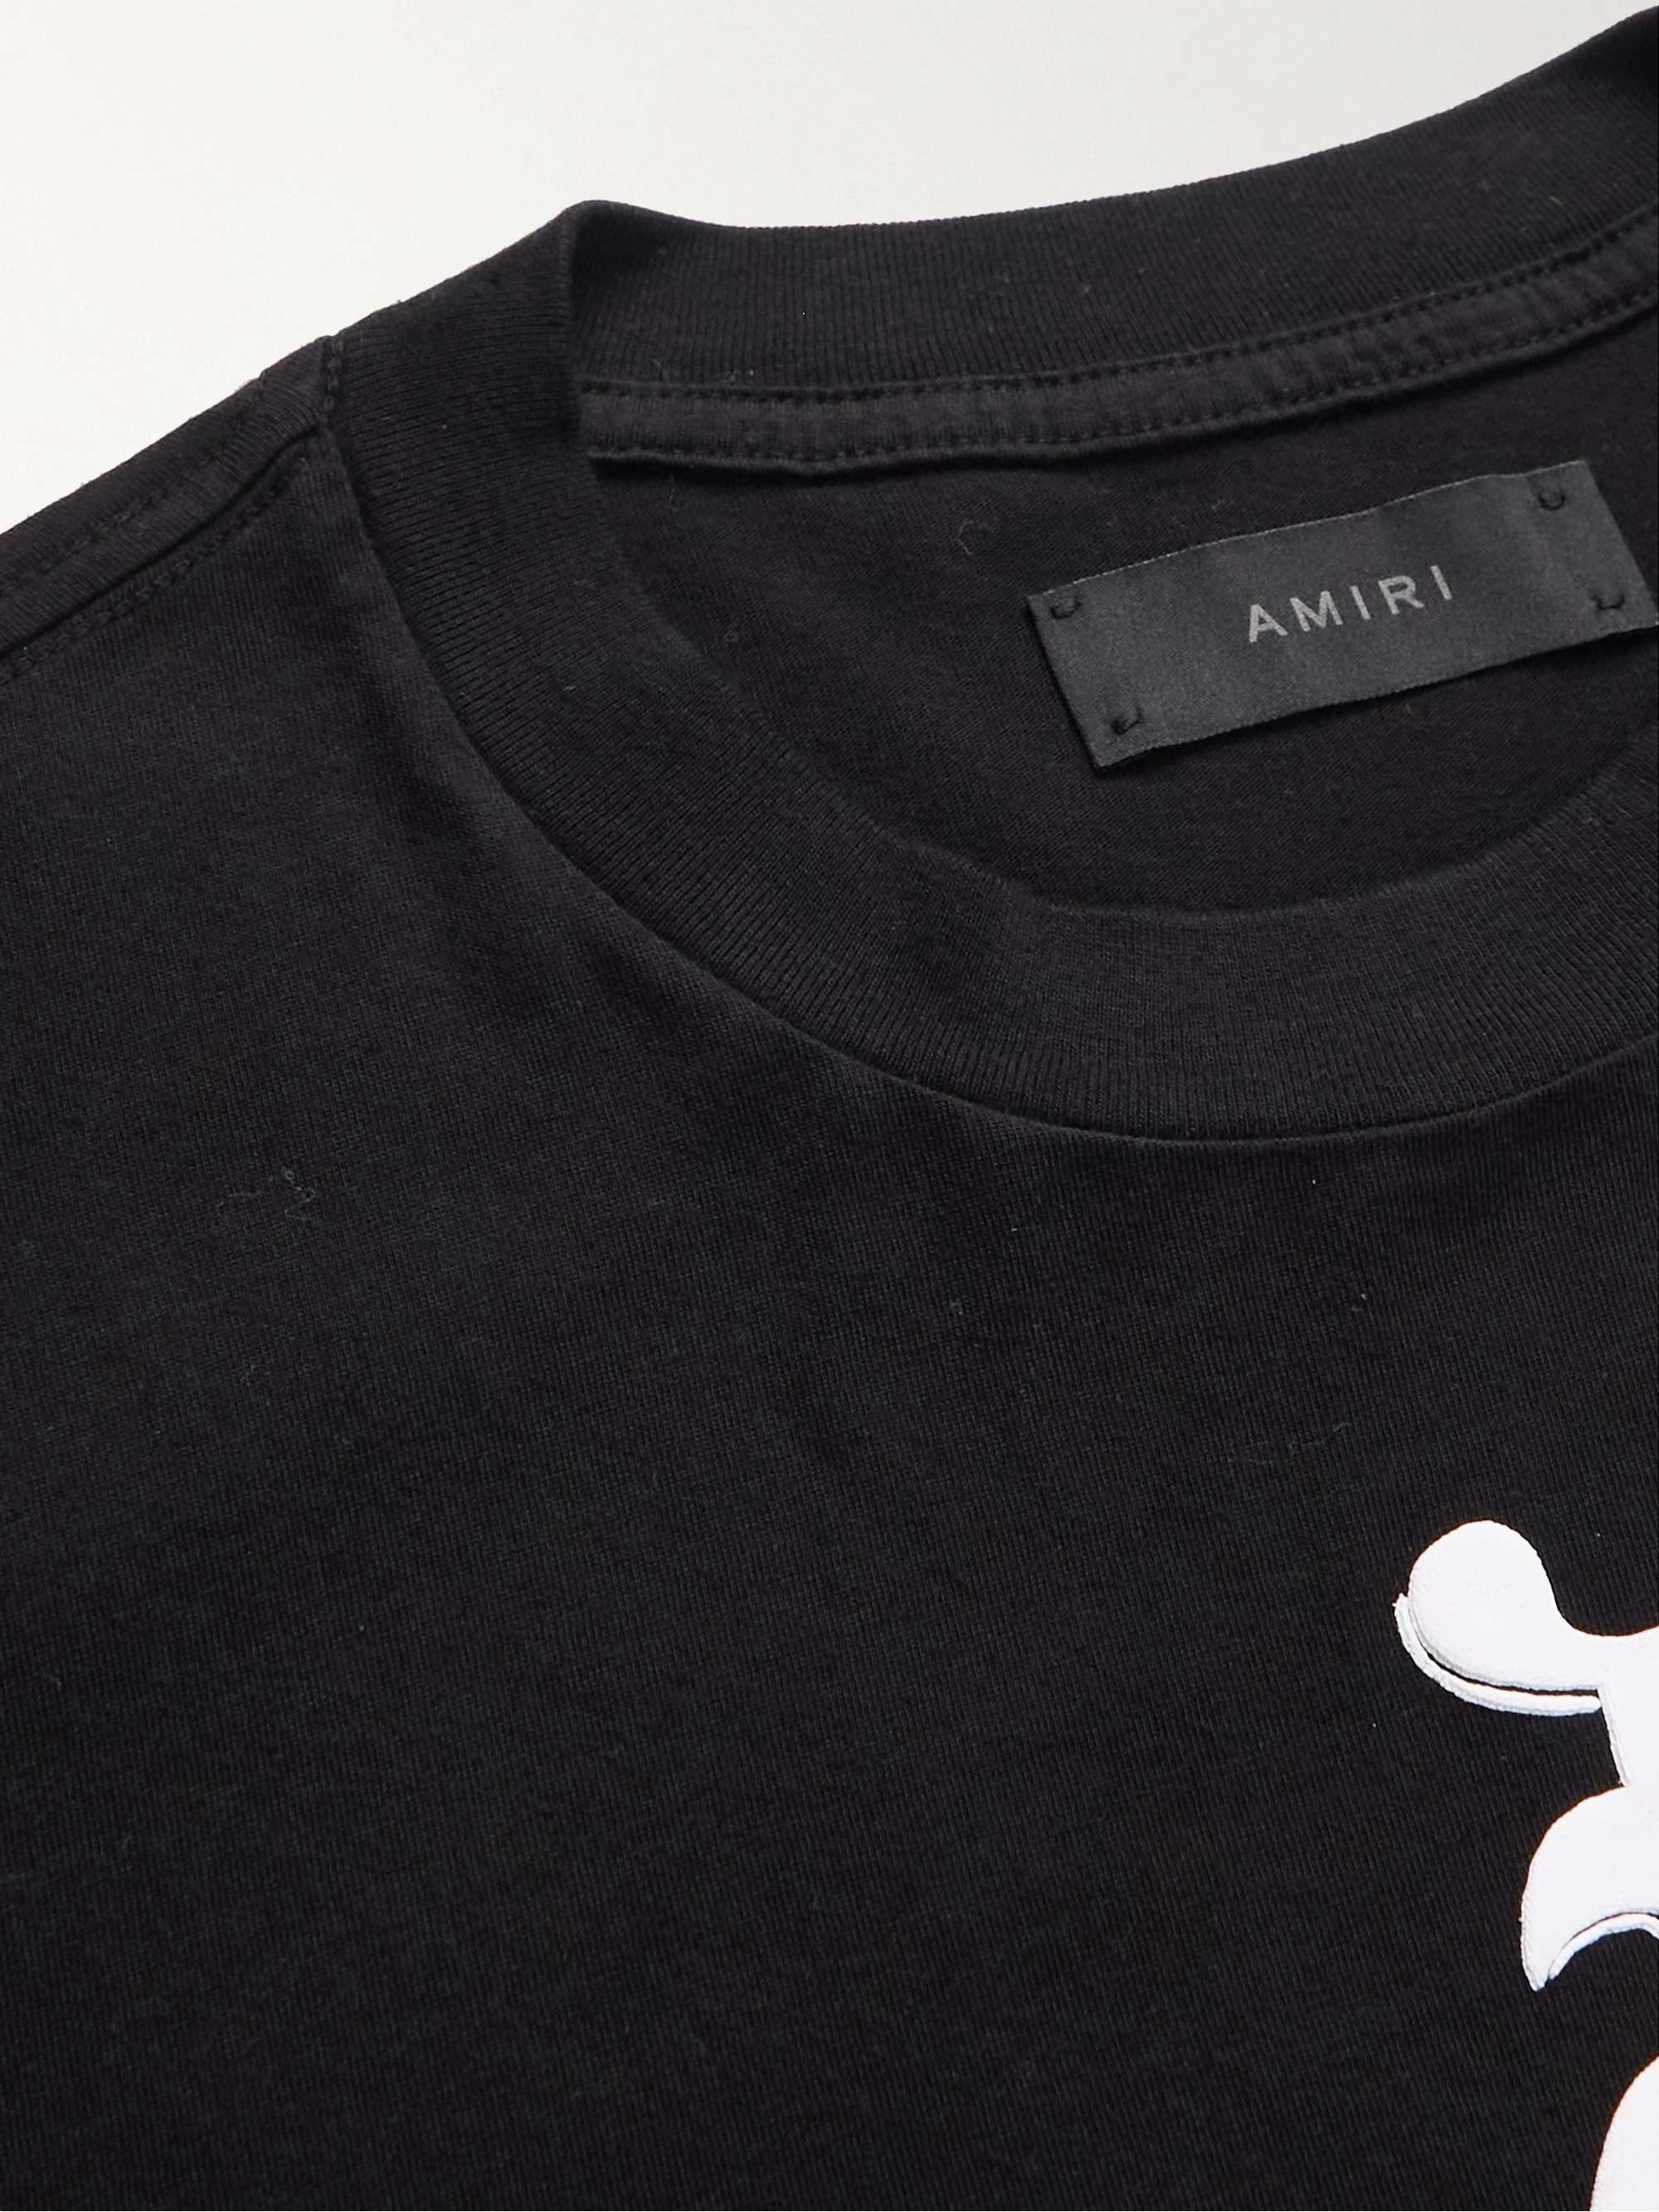 AMIRI + Wes Lang Solar Kings Logo-Print Cotton-Jersey T-Shirt